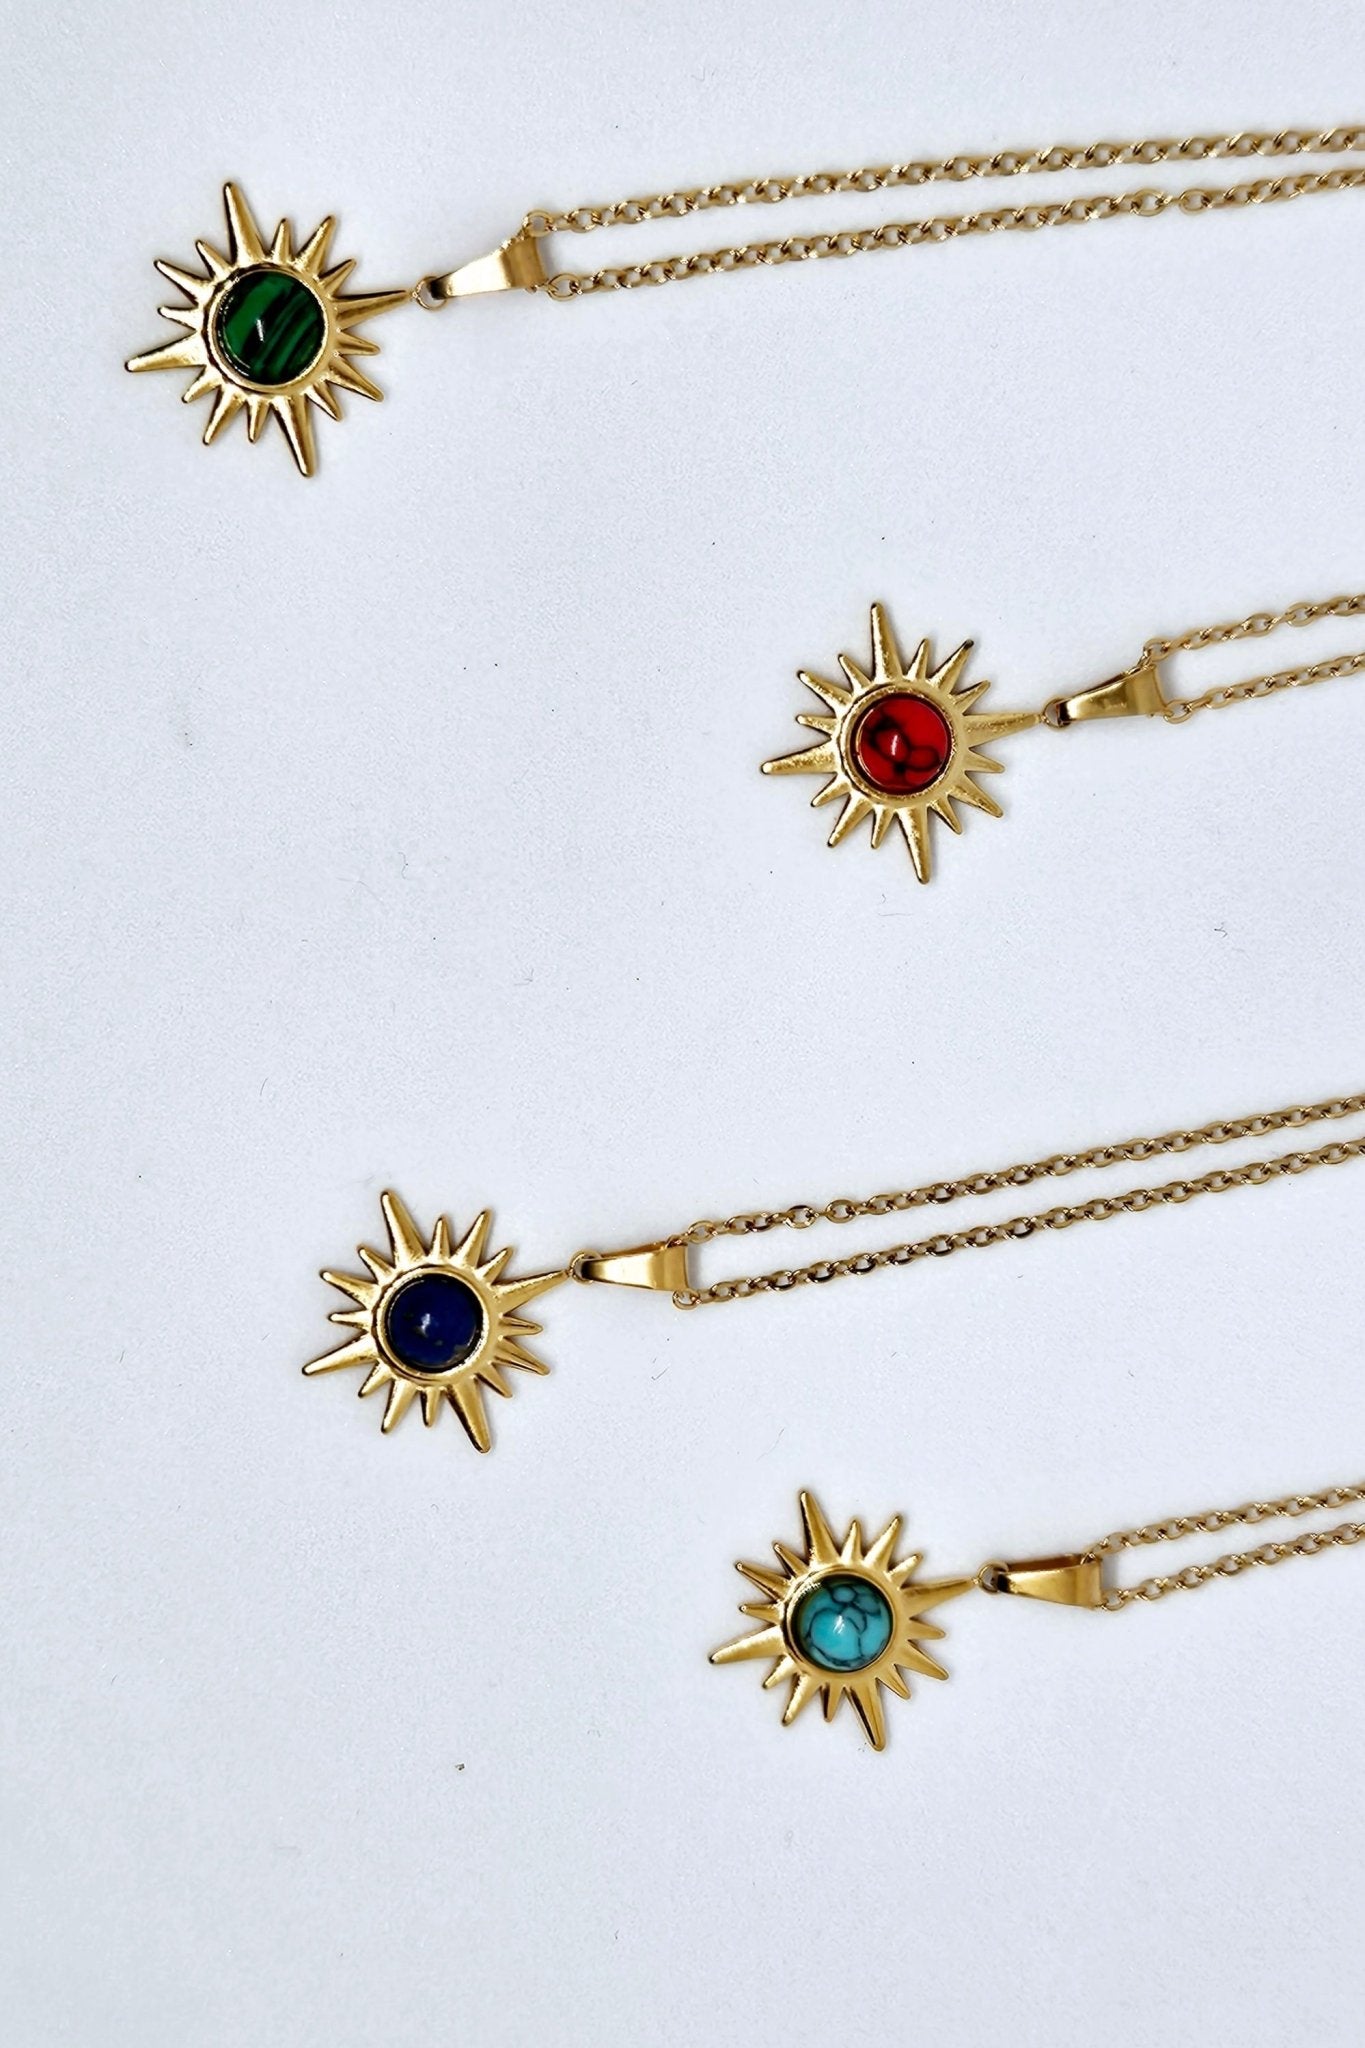 Vega Gold Star Necklace with Carnelian stone - Stellify